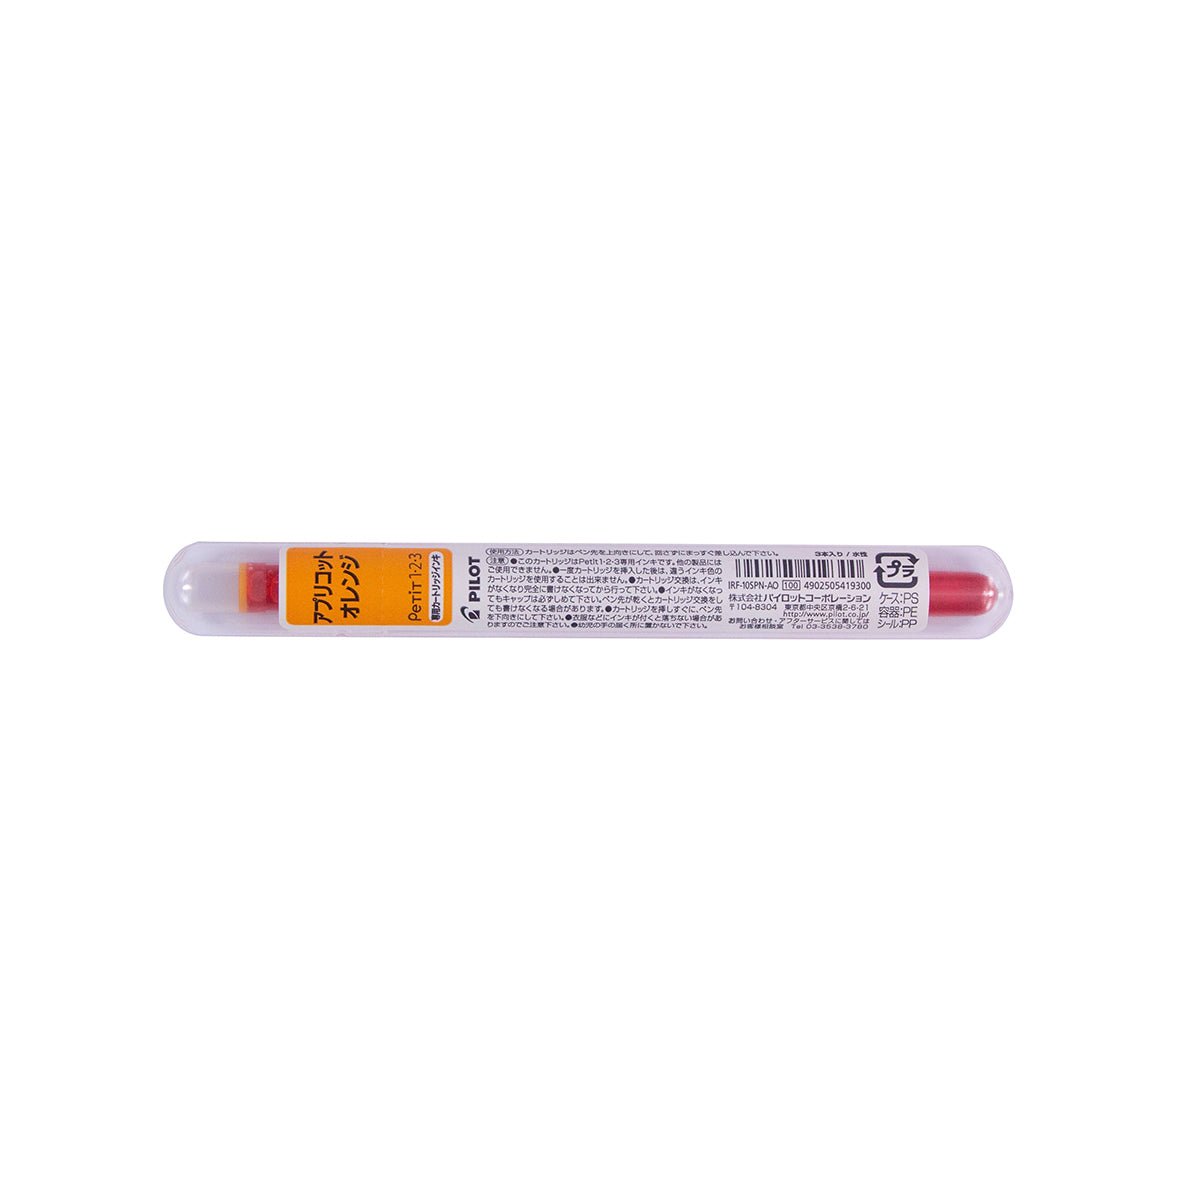 Petit Refill Ink 3 x Cartridges in Tube - Apricot Orange - theartshop.com.au